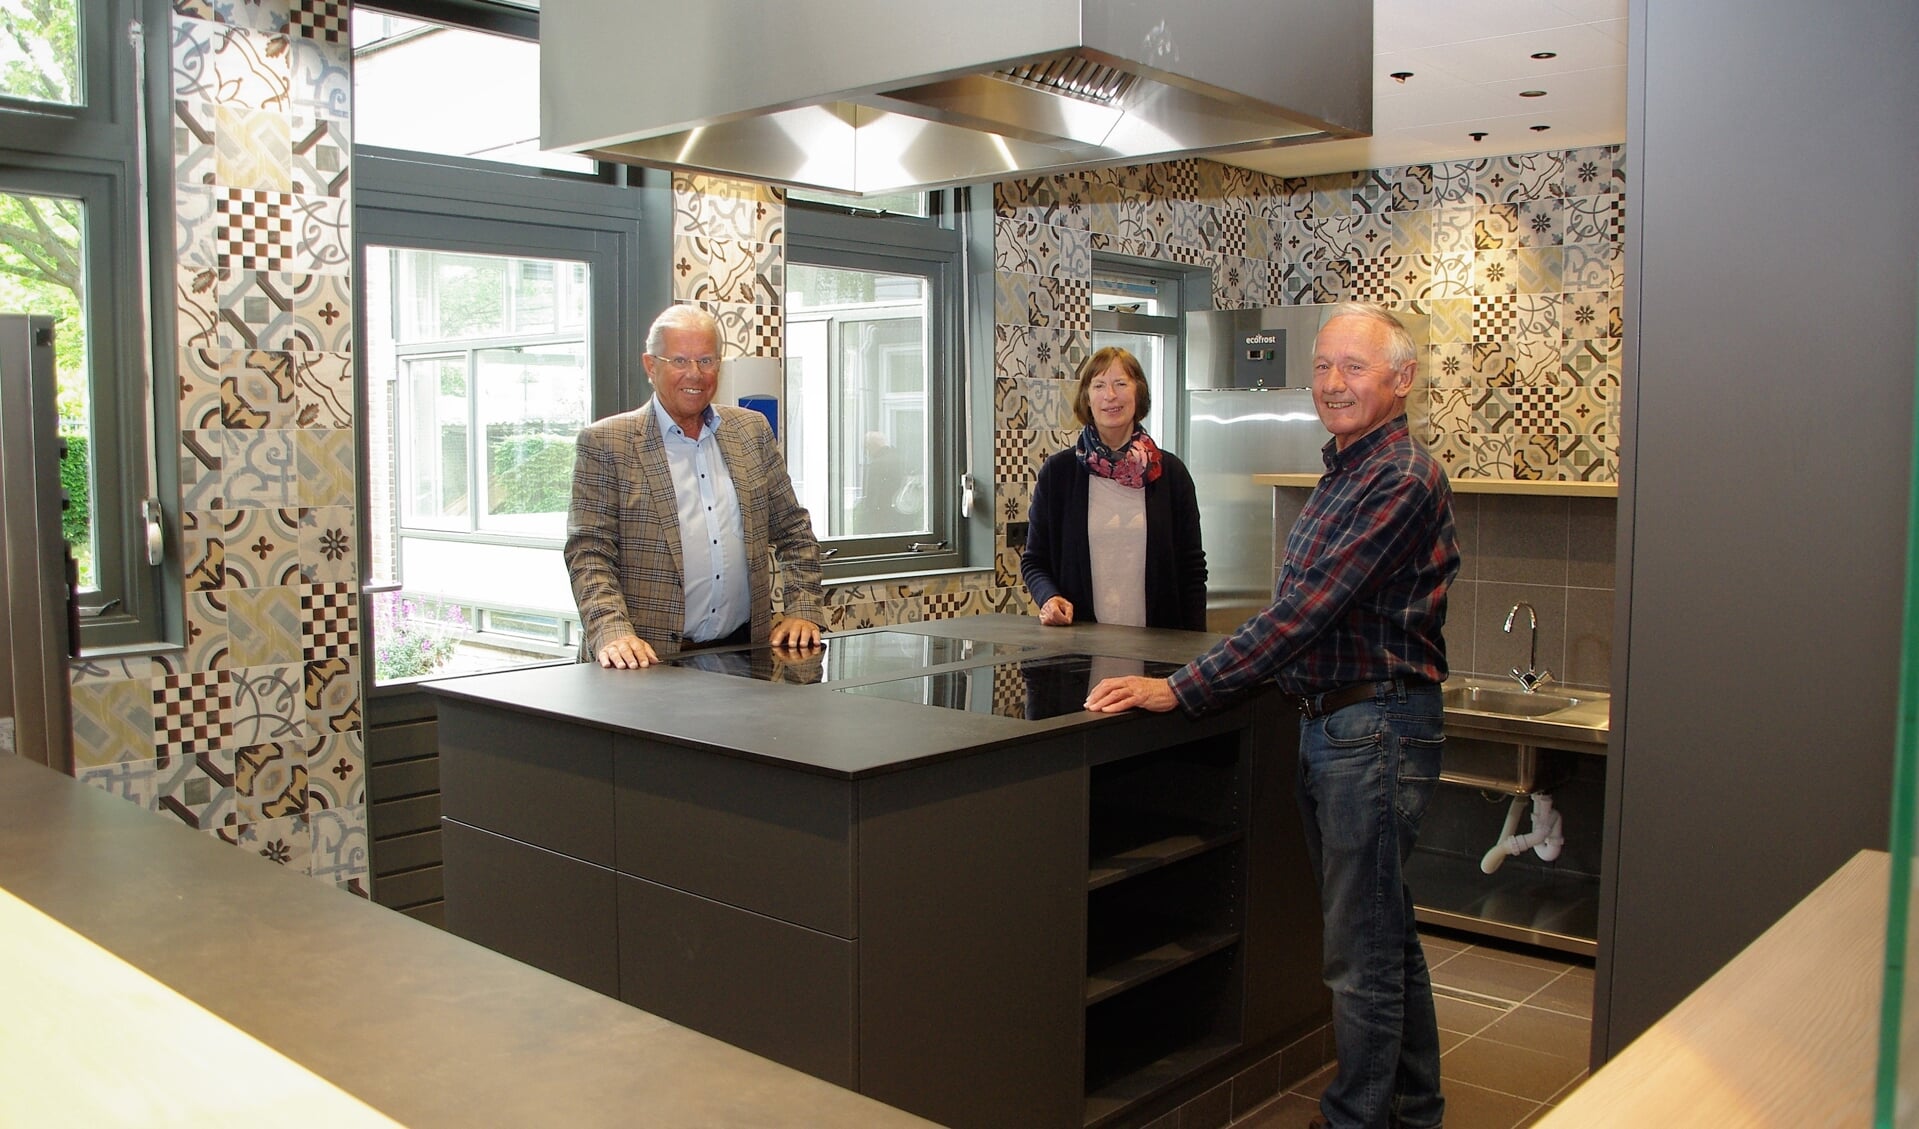 Hans Honsbeek, Ali Hellinga en Ruud Janse van Mantgem in de totaal vernieuwde keuken. | Foto Willemien Timmers